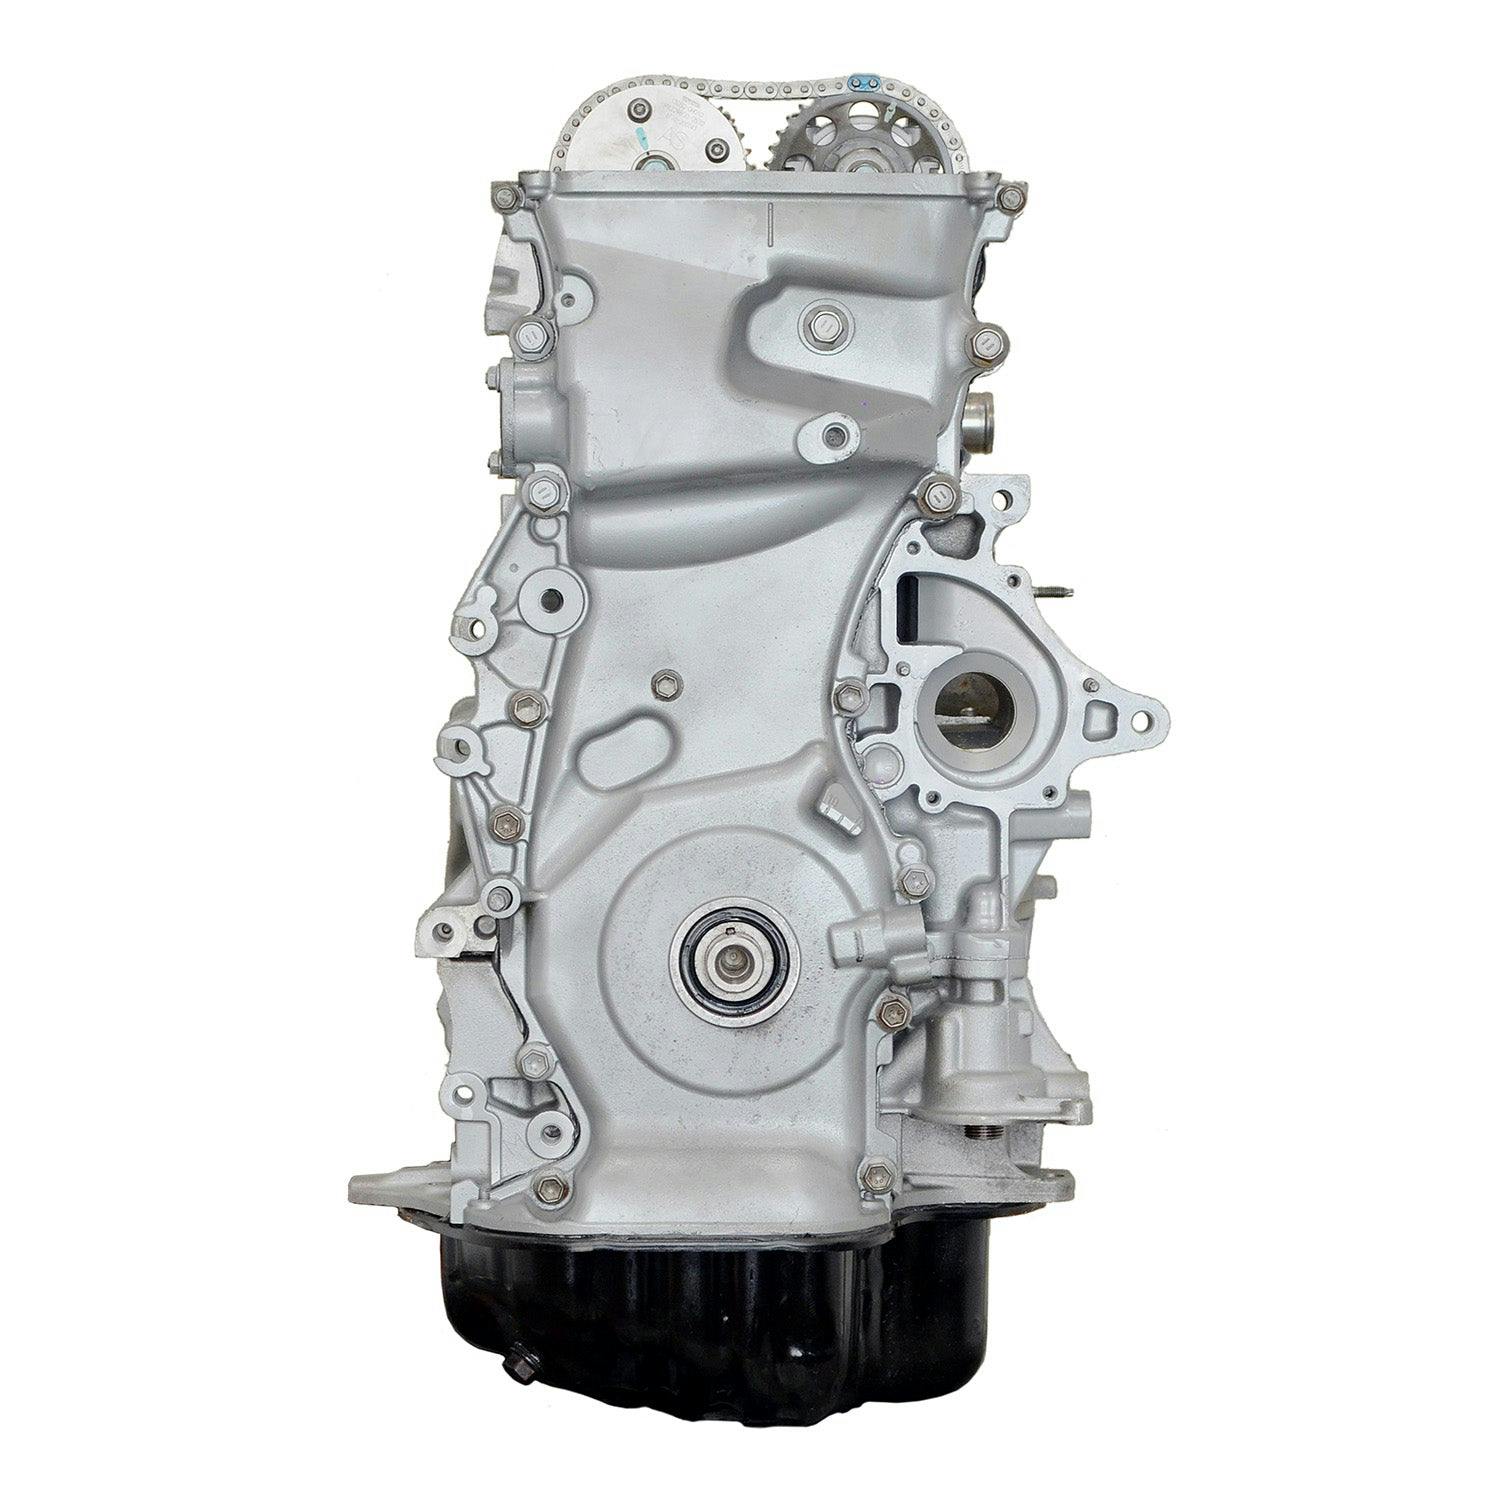 2.4L Inline-4 Engine for 2005-2015 Scion xB/Toyota RAV4